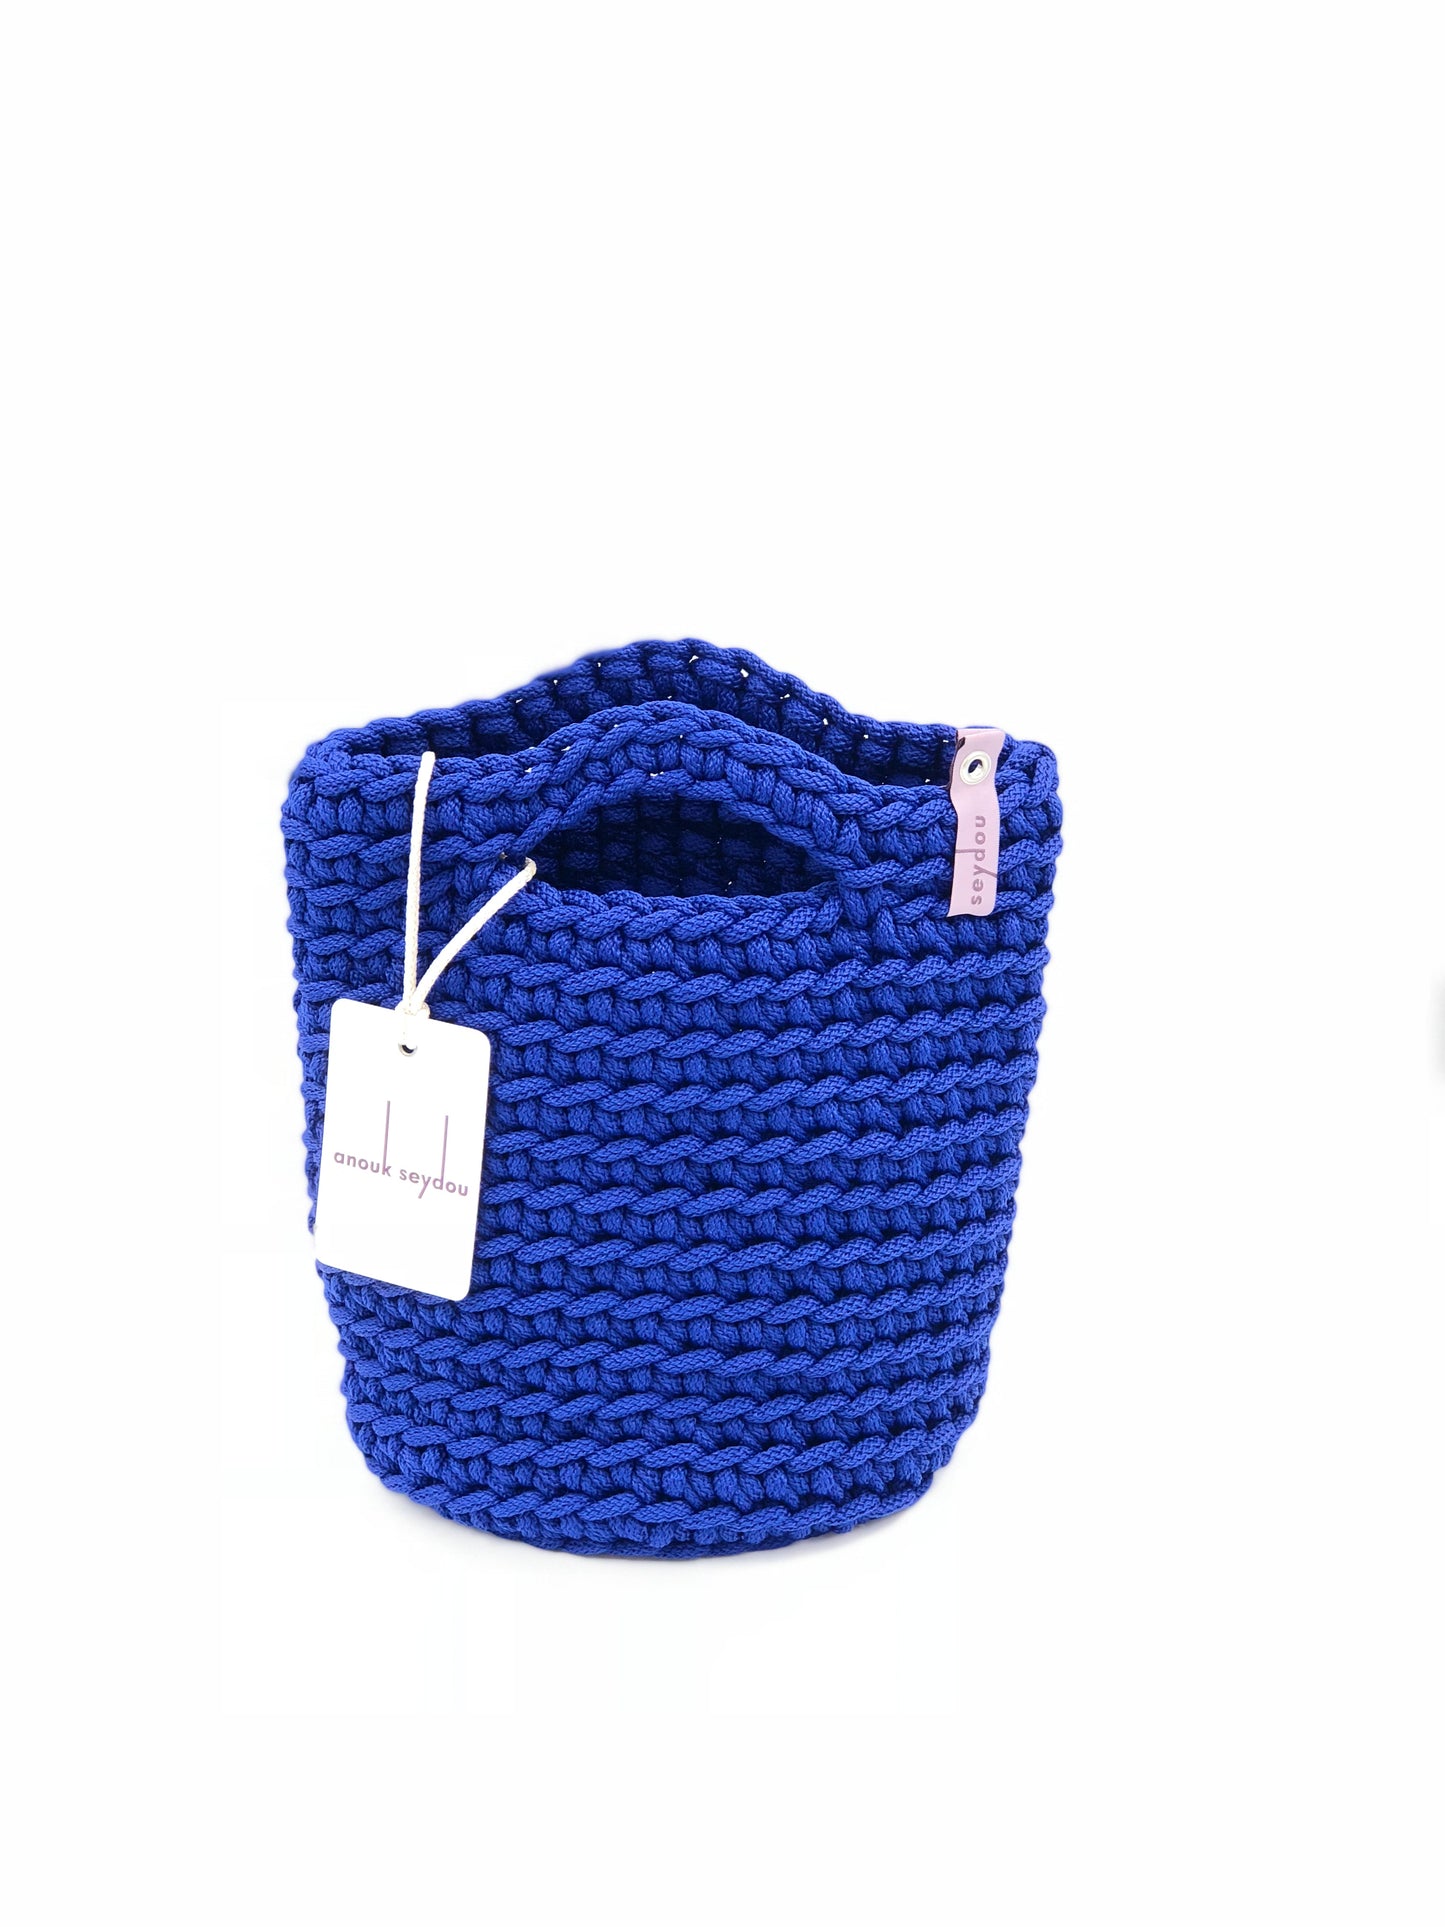 Tote Bag Scandinavian Style Midnight Blue Crochet Tote Bag Size MINI